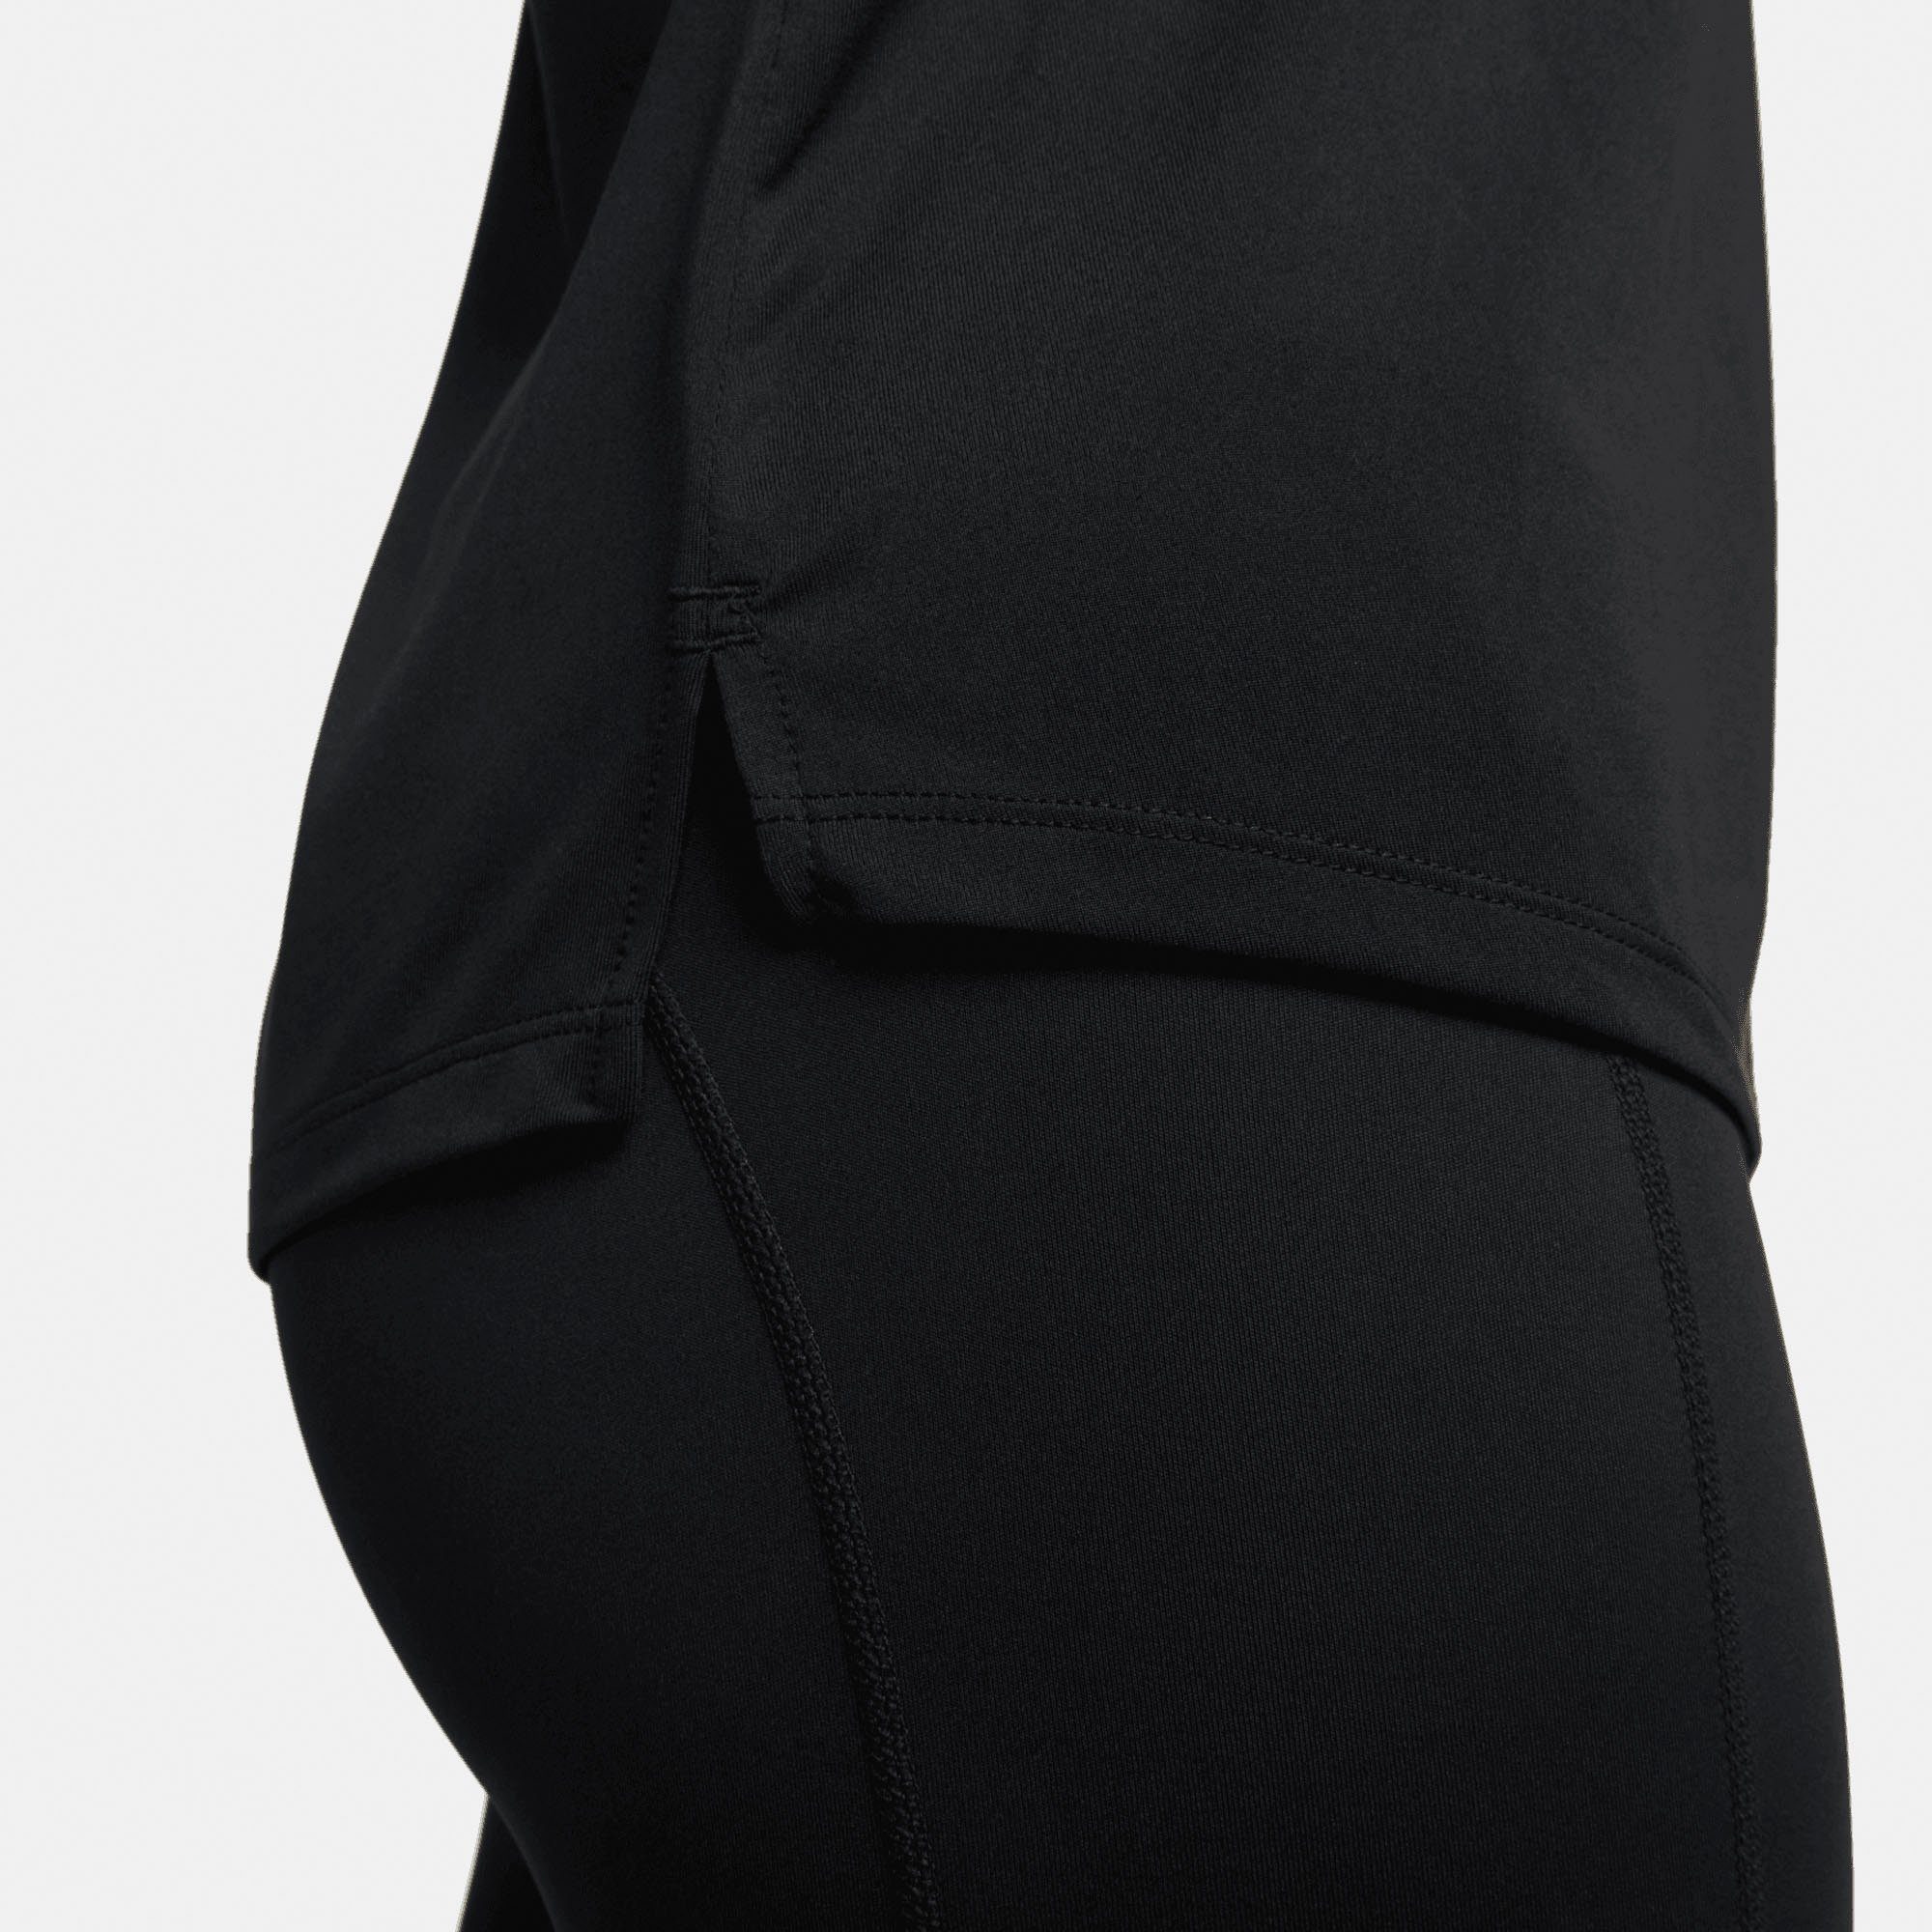 Dri-FIT Women's Nike Laufshirt Short-Sleeved BLACK Swoosh One Top